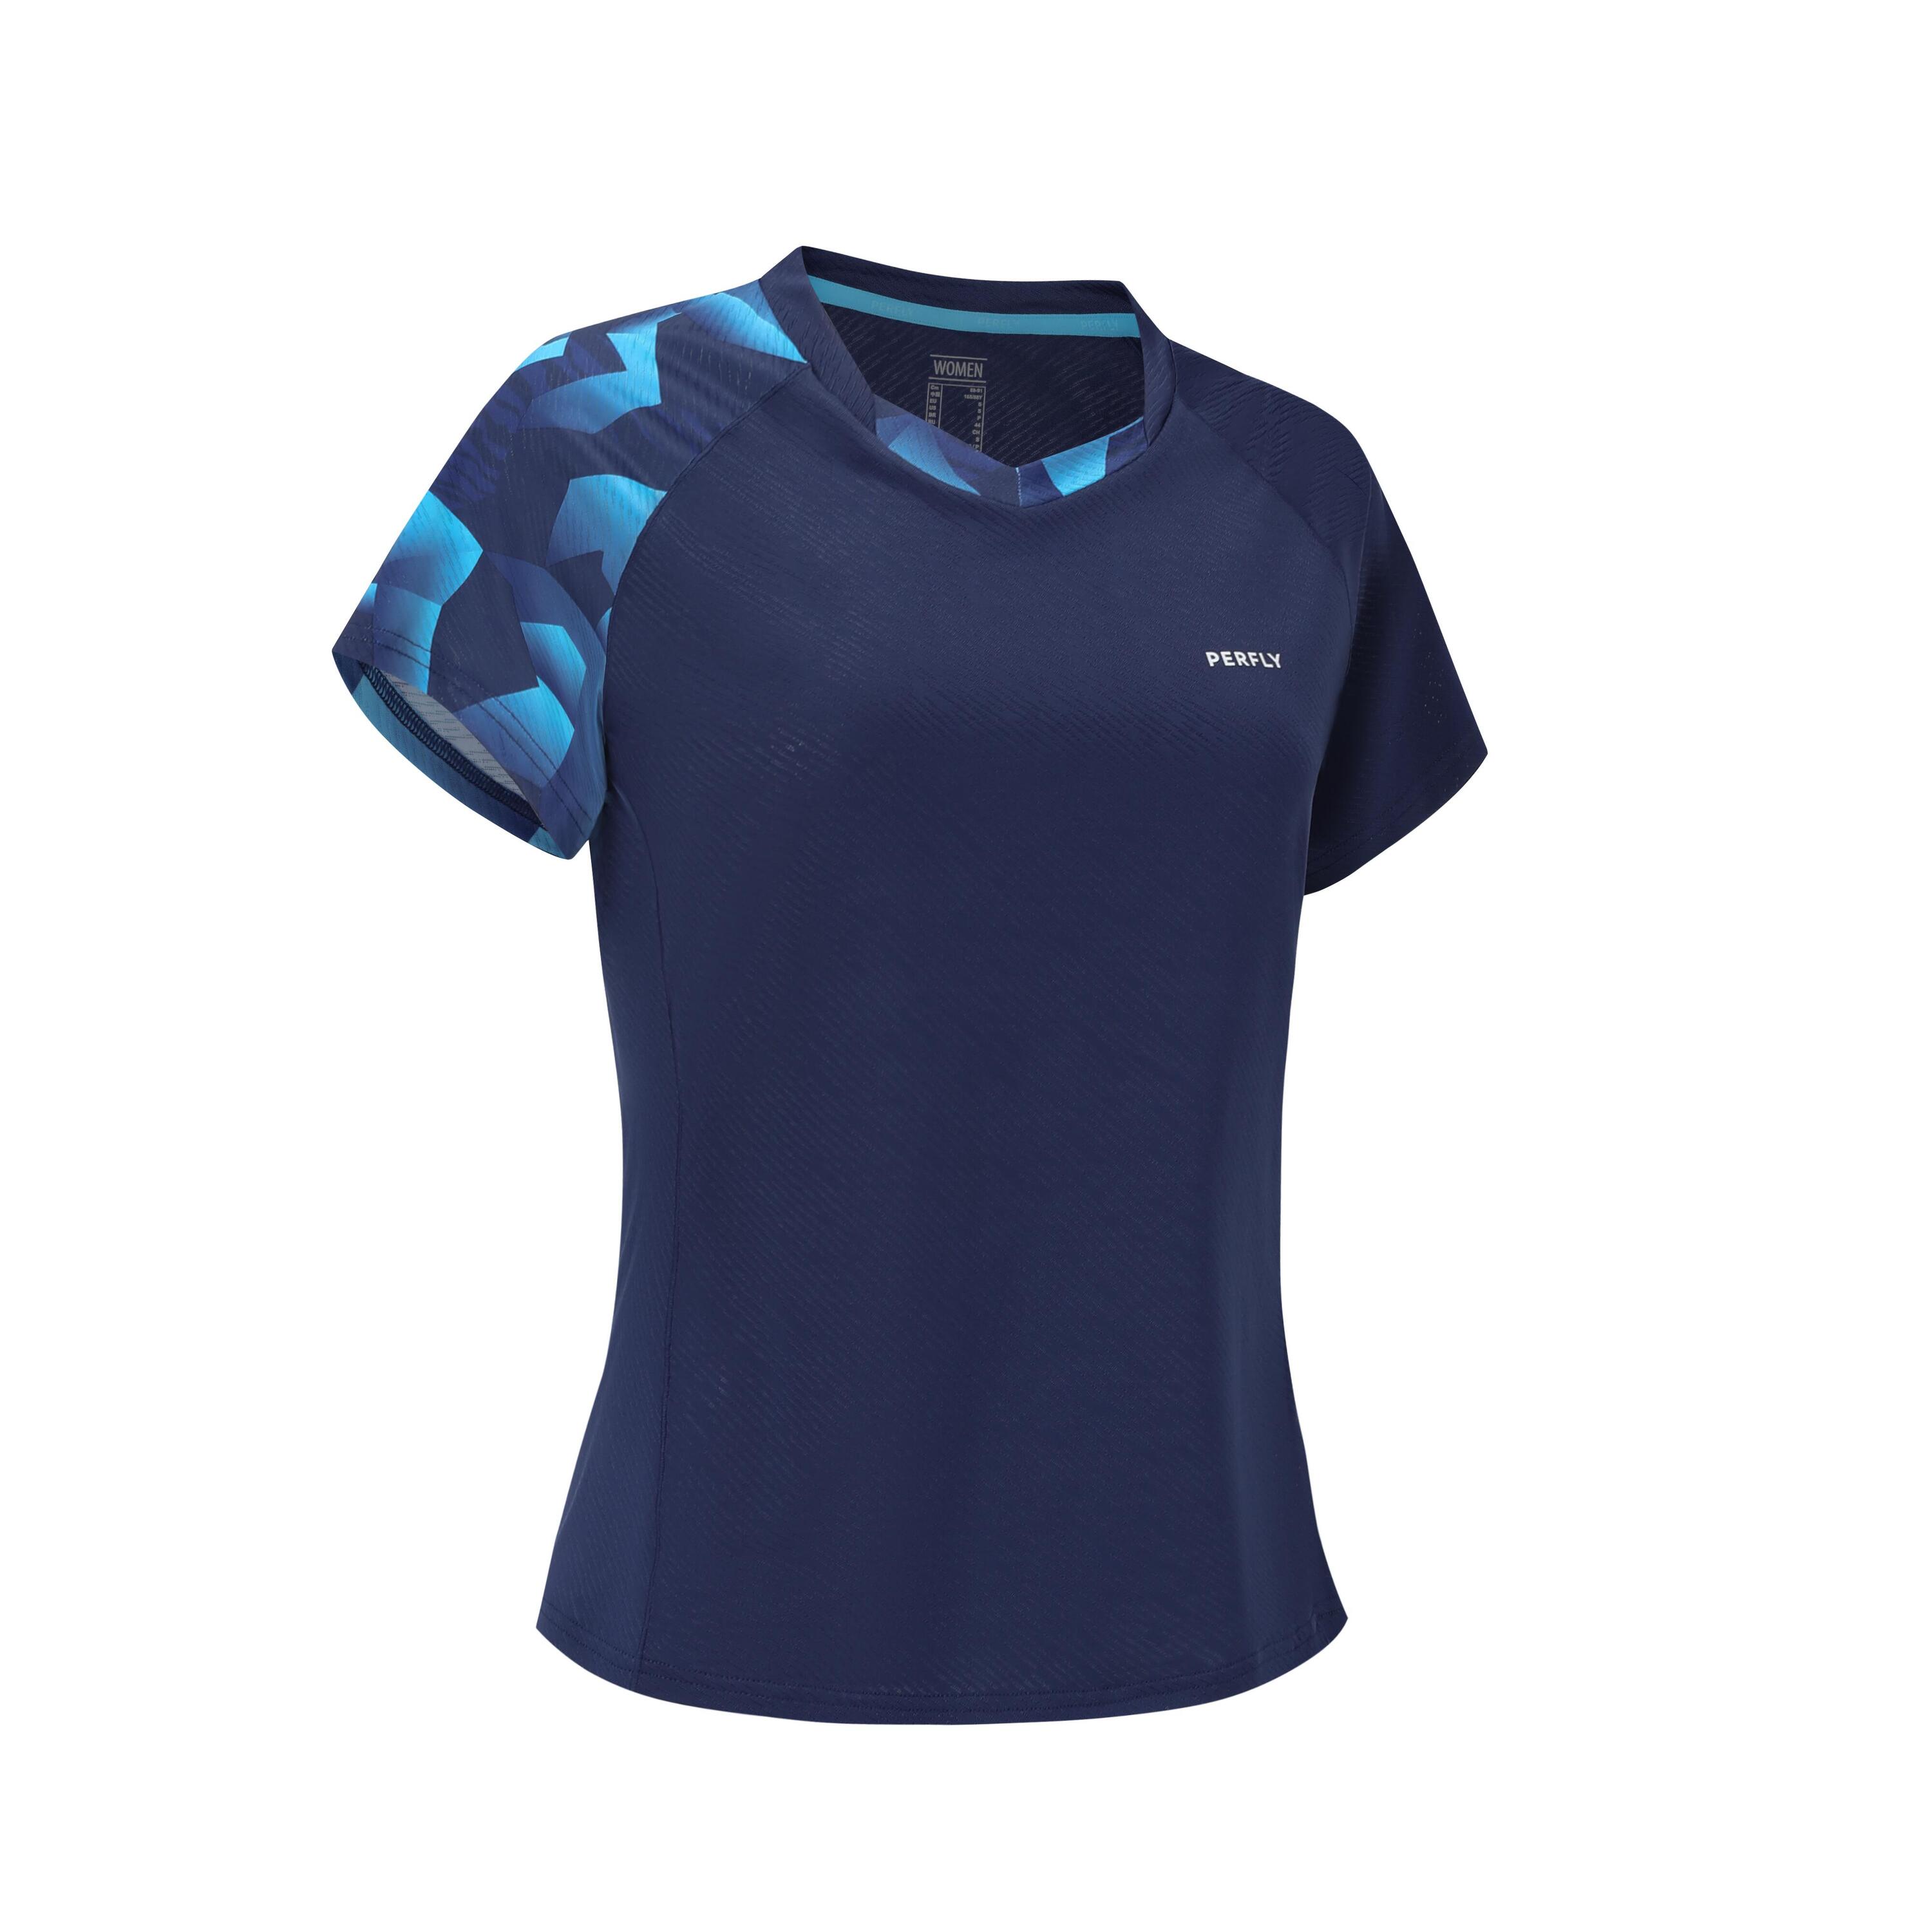 PERFLY LITE Badminton T-shirt 560 Women Navy Aqua